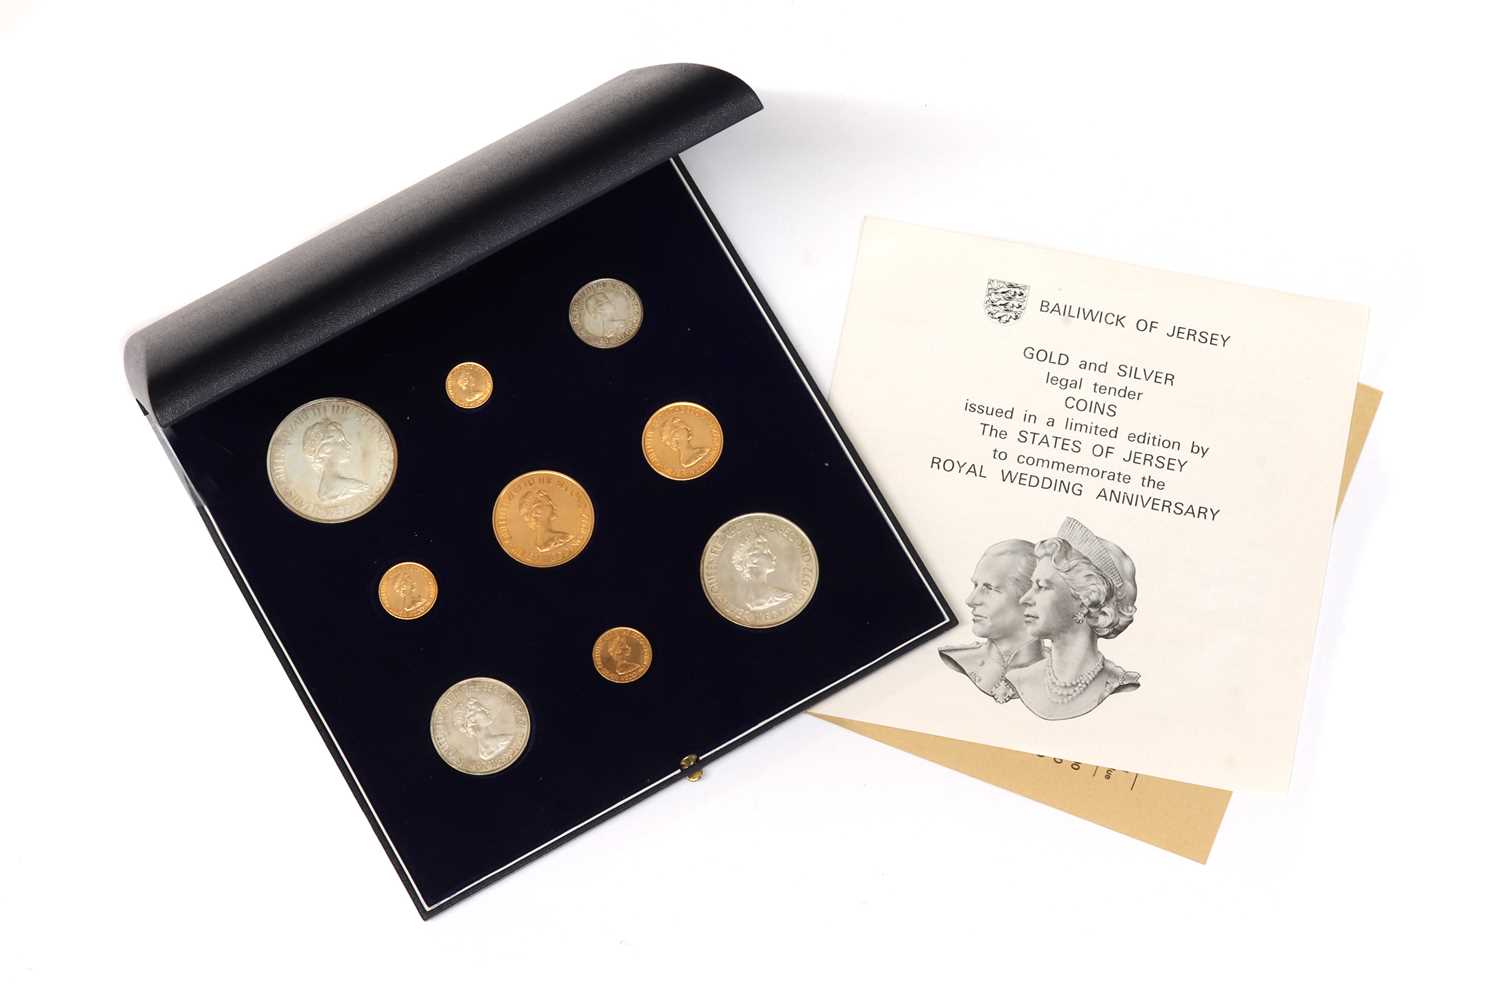 Lot 67 - Coins, Great Britain, Elizabeth II (1952-)